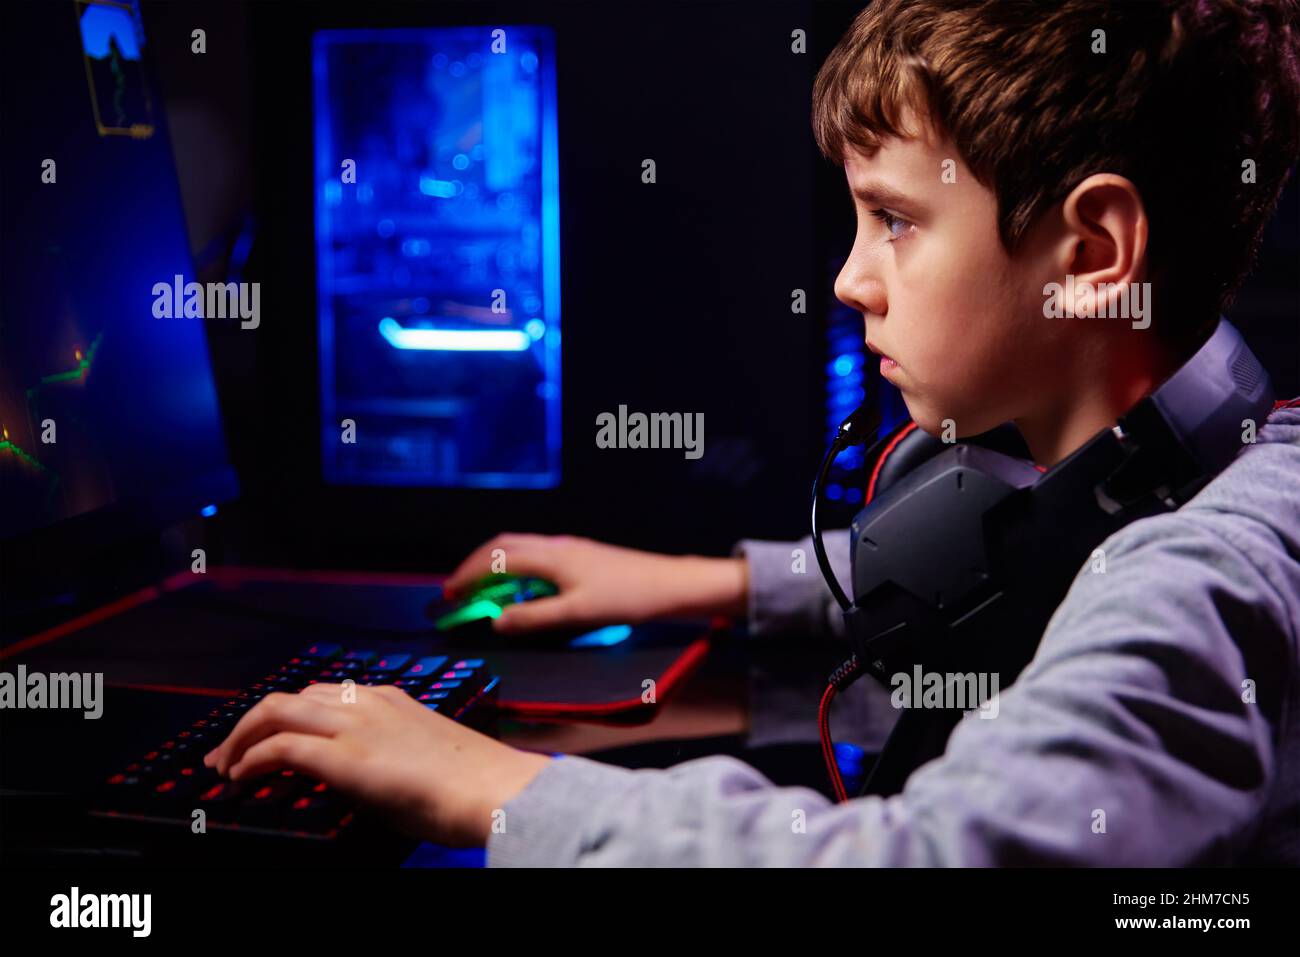 GamerDad: Gaming with Children » Glow in the Dark!